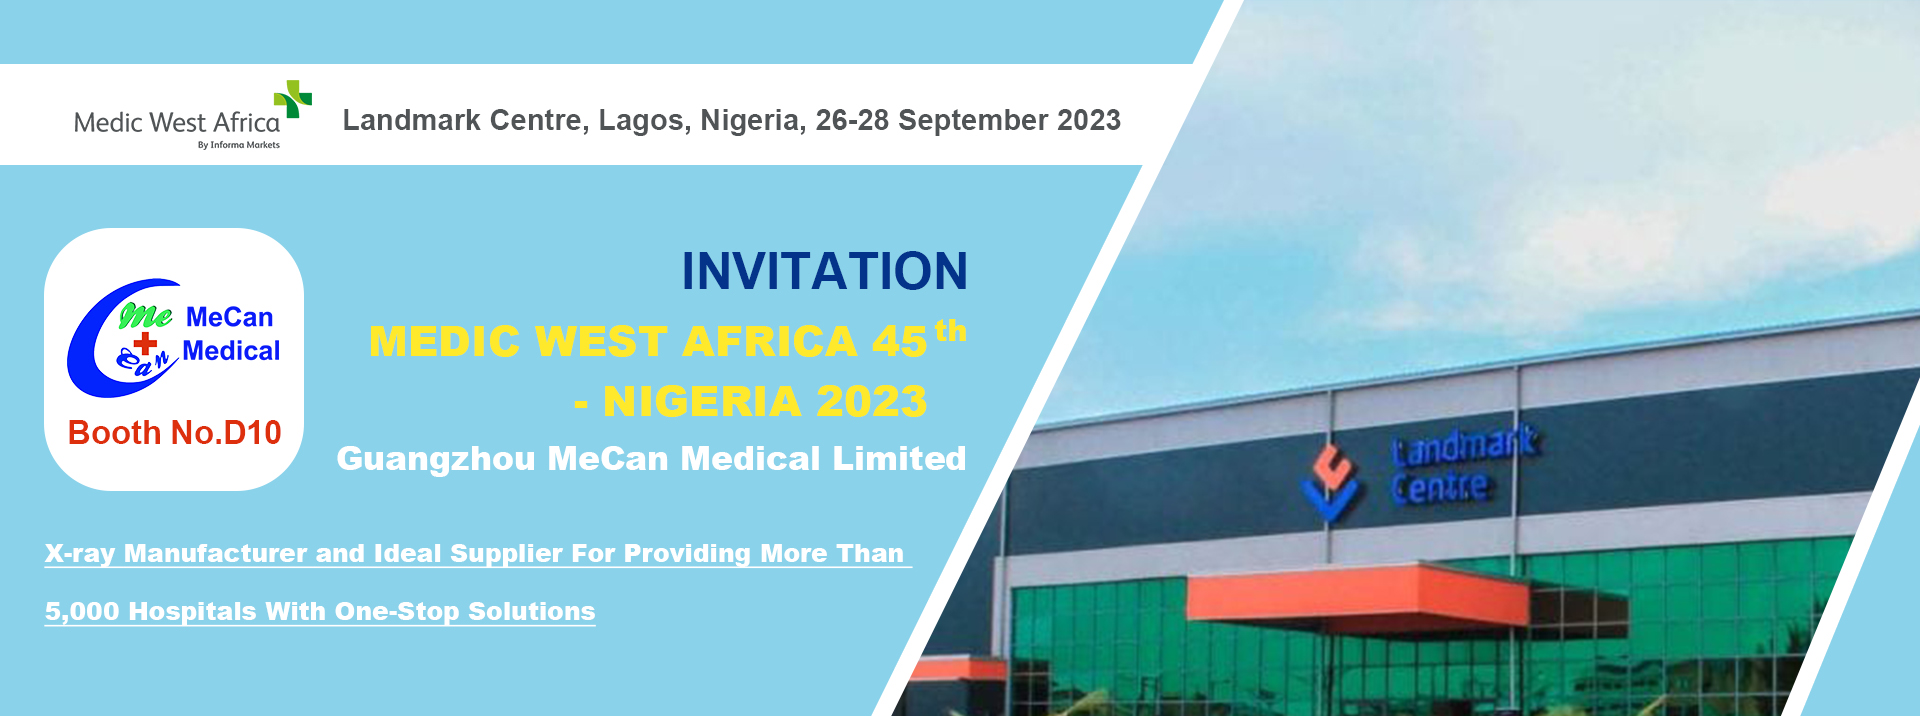 MeCan Medical at Medic West Africa 45th Nigeria